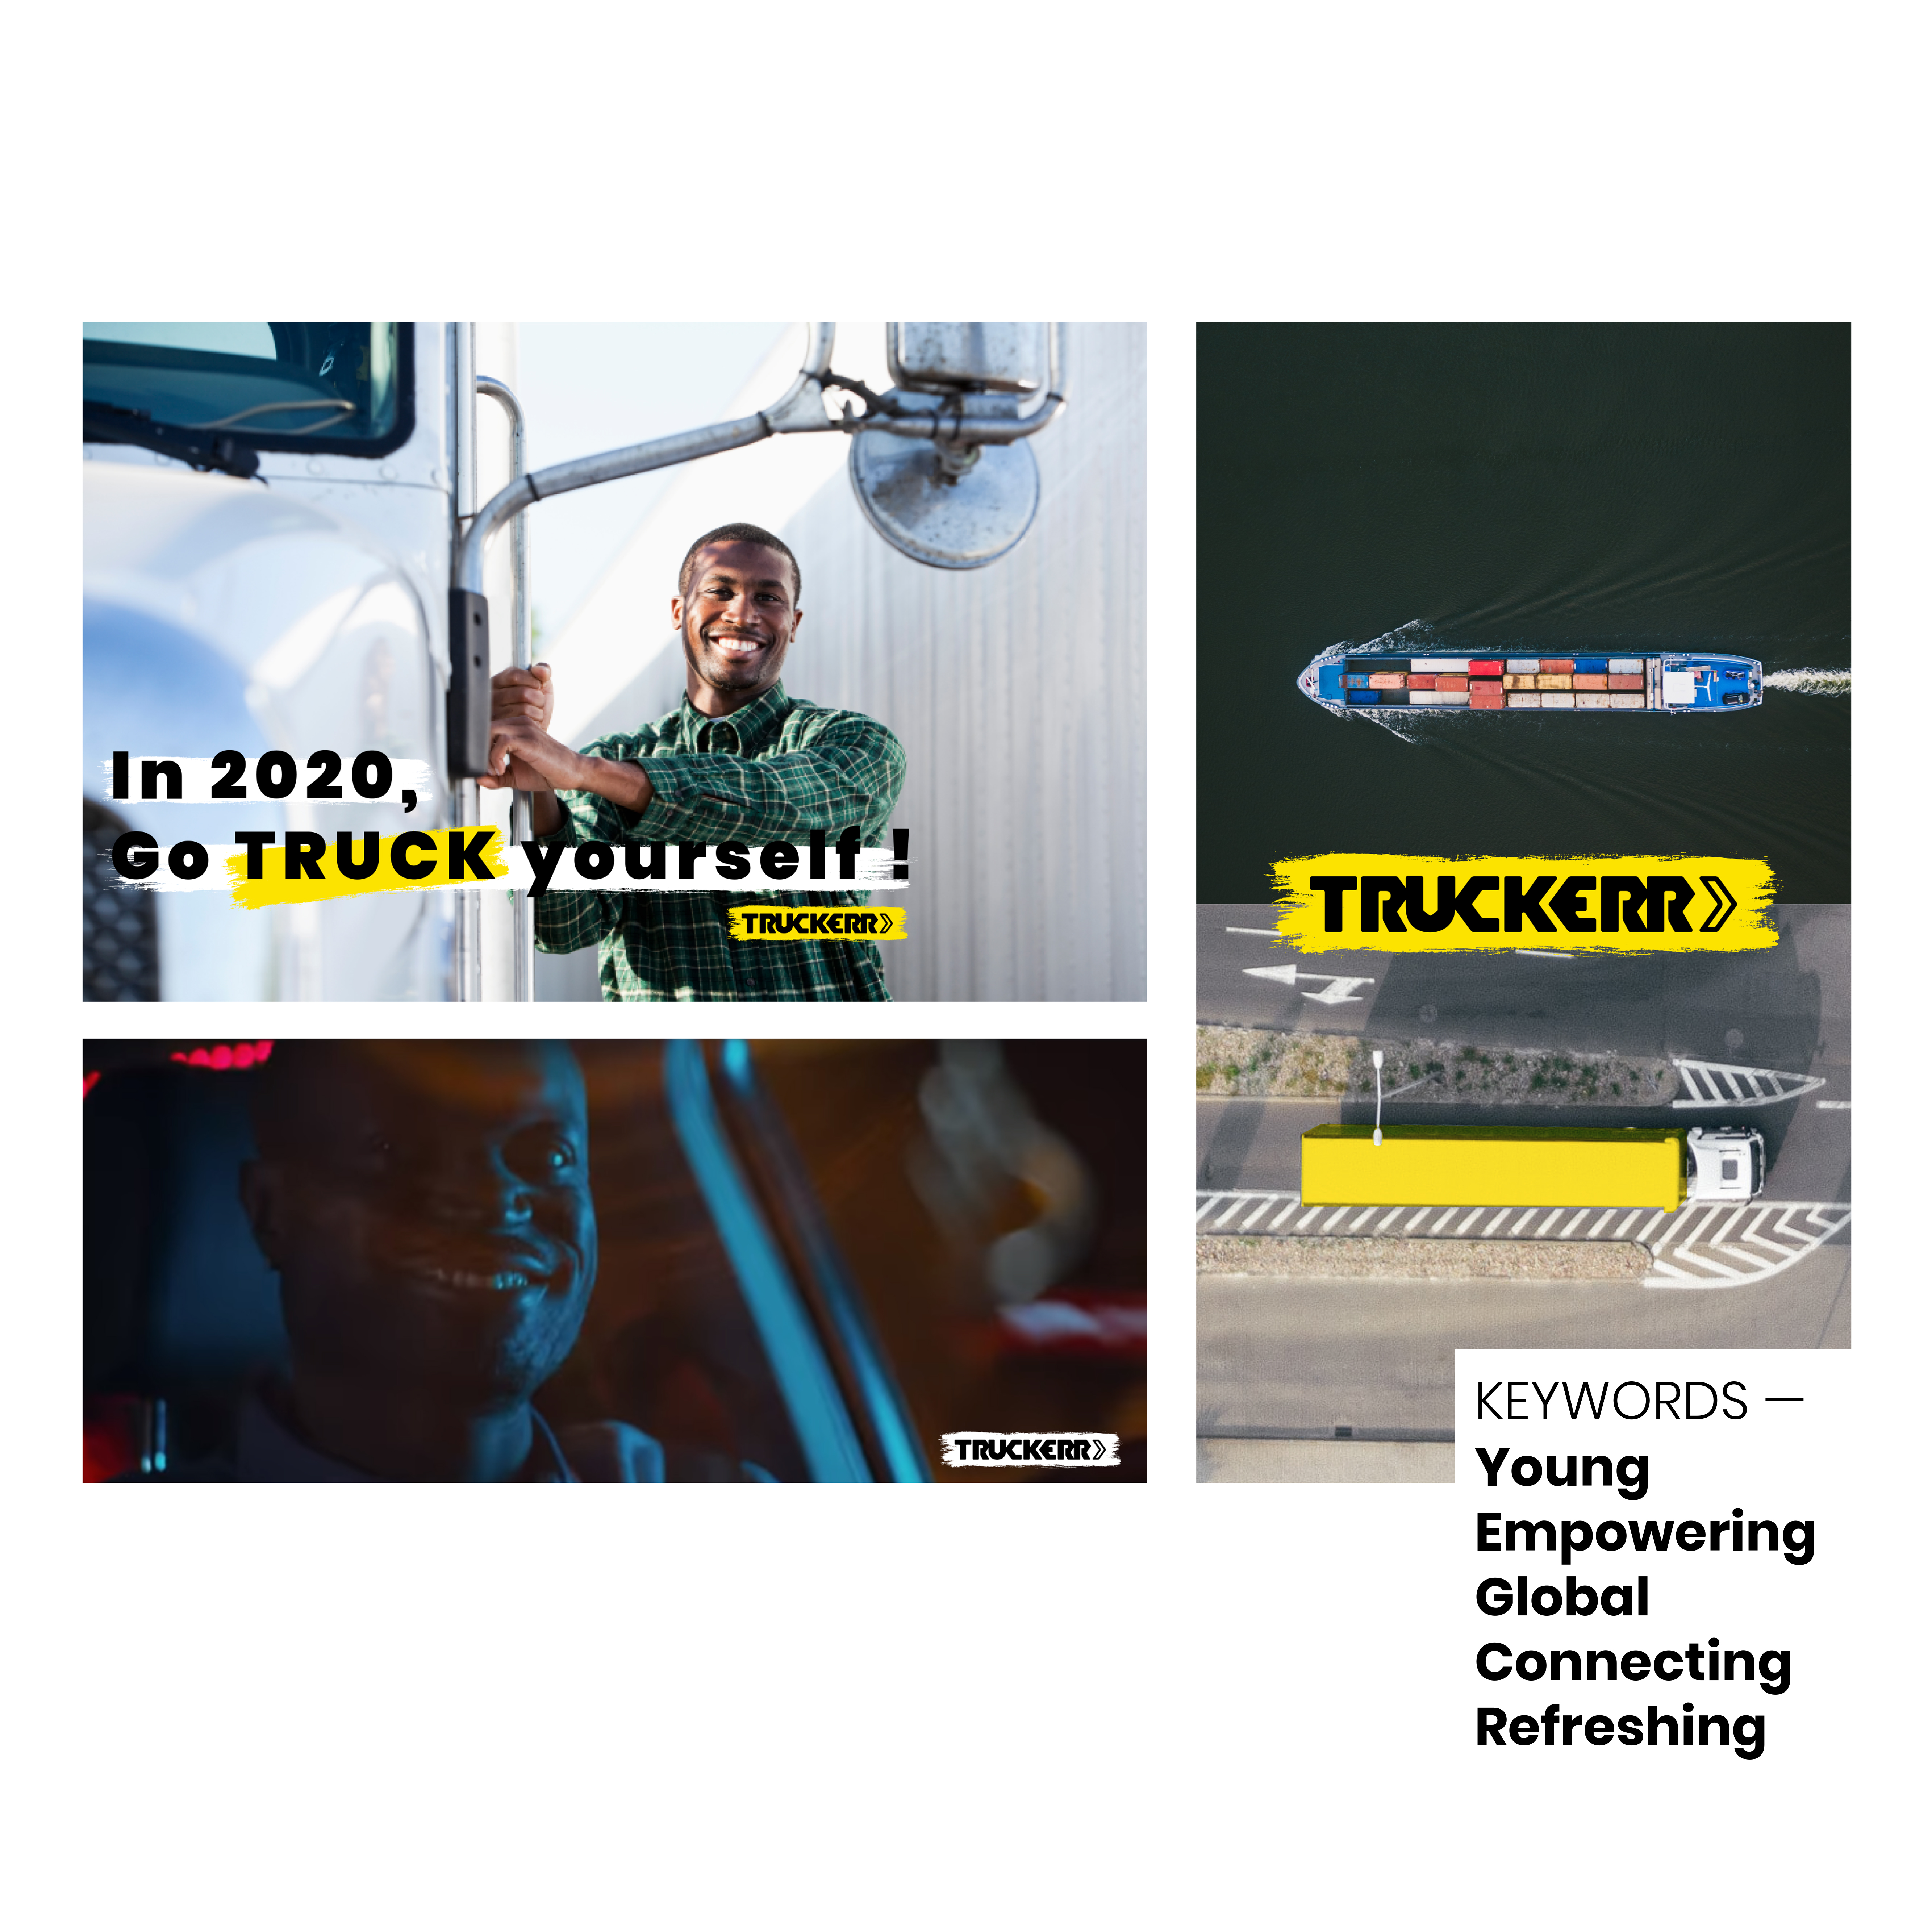 Truckerr_Toptal_Branding_V1_20191118